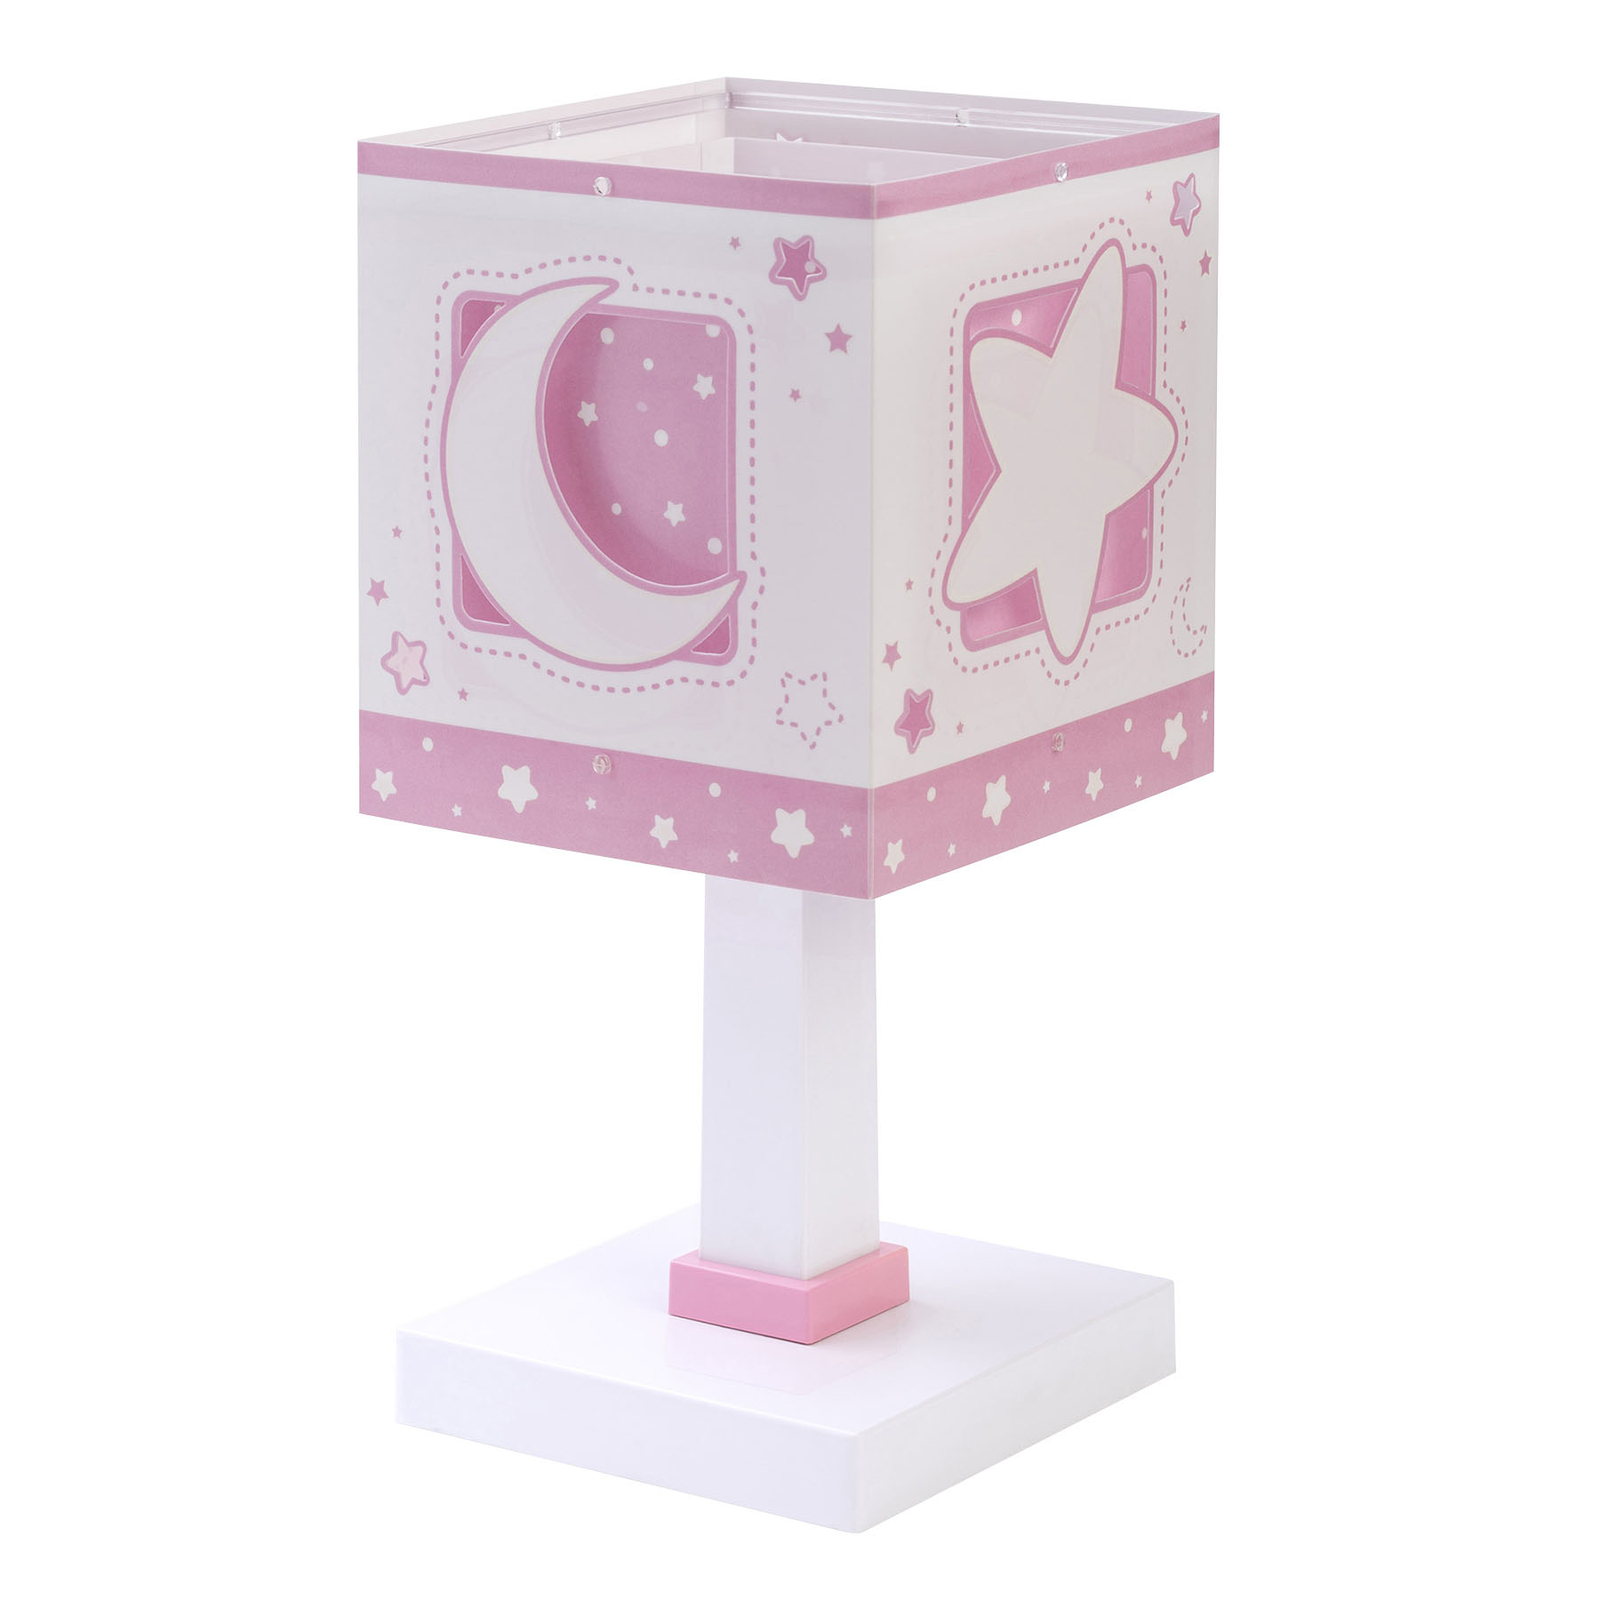 Moonlight children’s table lamp, pink